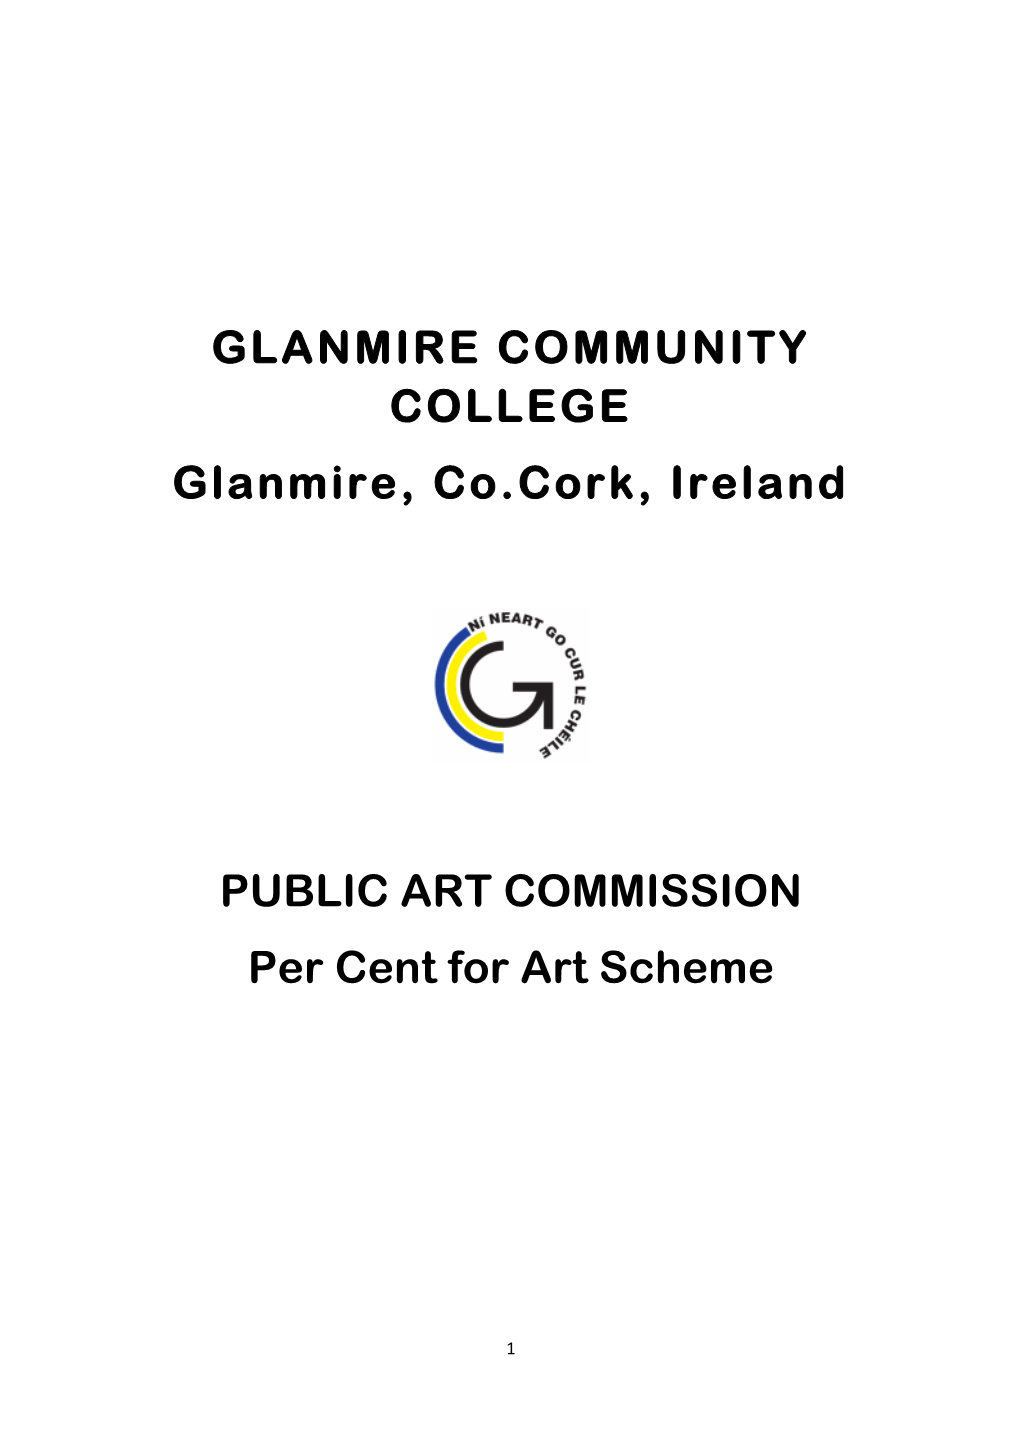 GLANMIRE COMMUNITY COLLEGE Glanmire, Co.Cork, Ireland PUBLIC